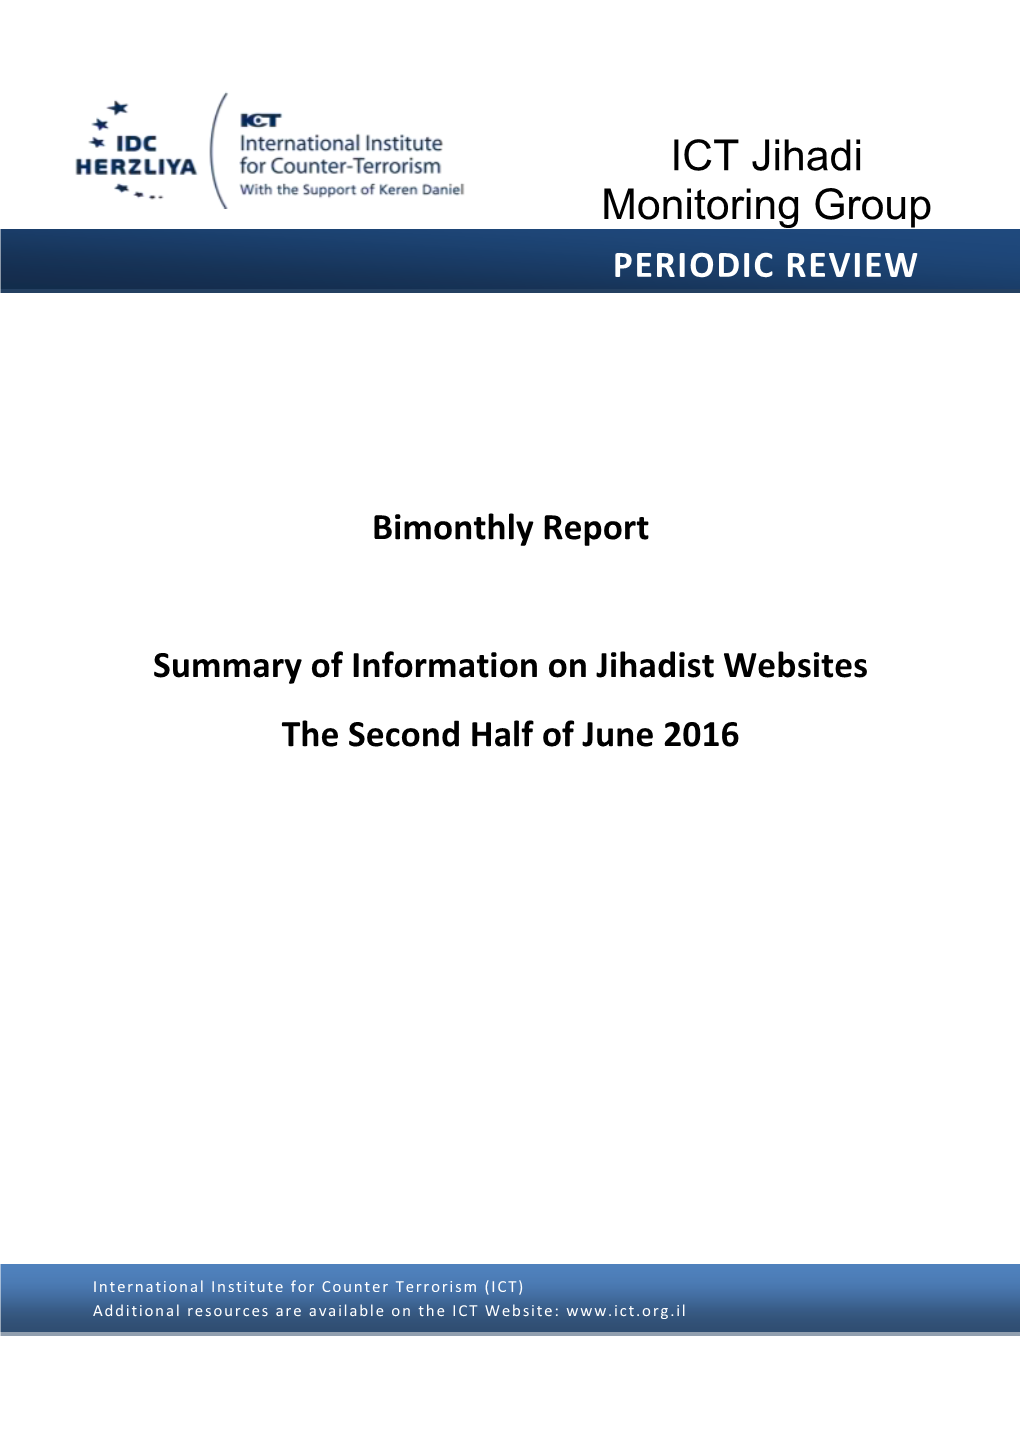 Summary of Information on Jihadist Websites the Second Half of June 2016